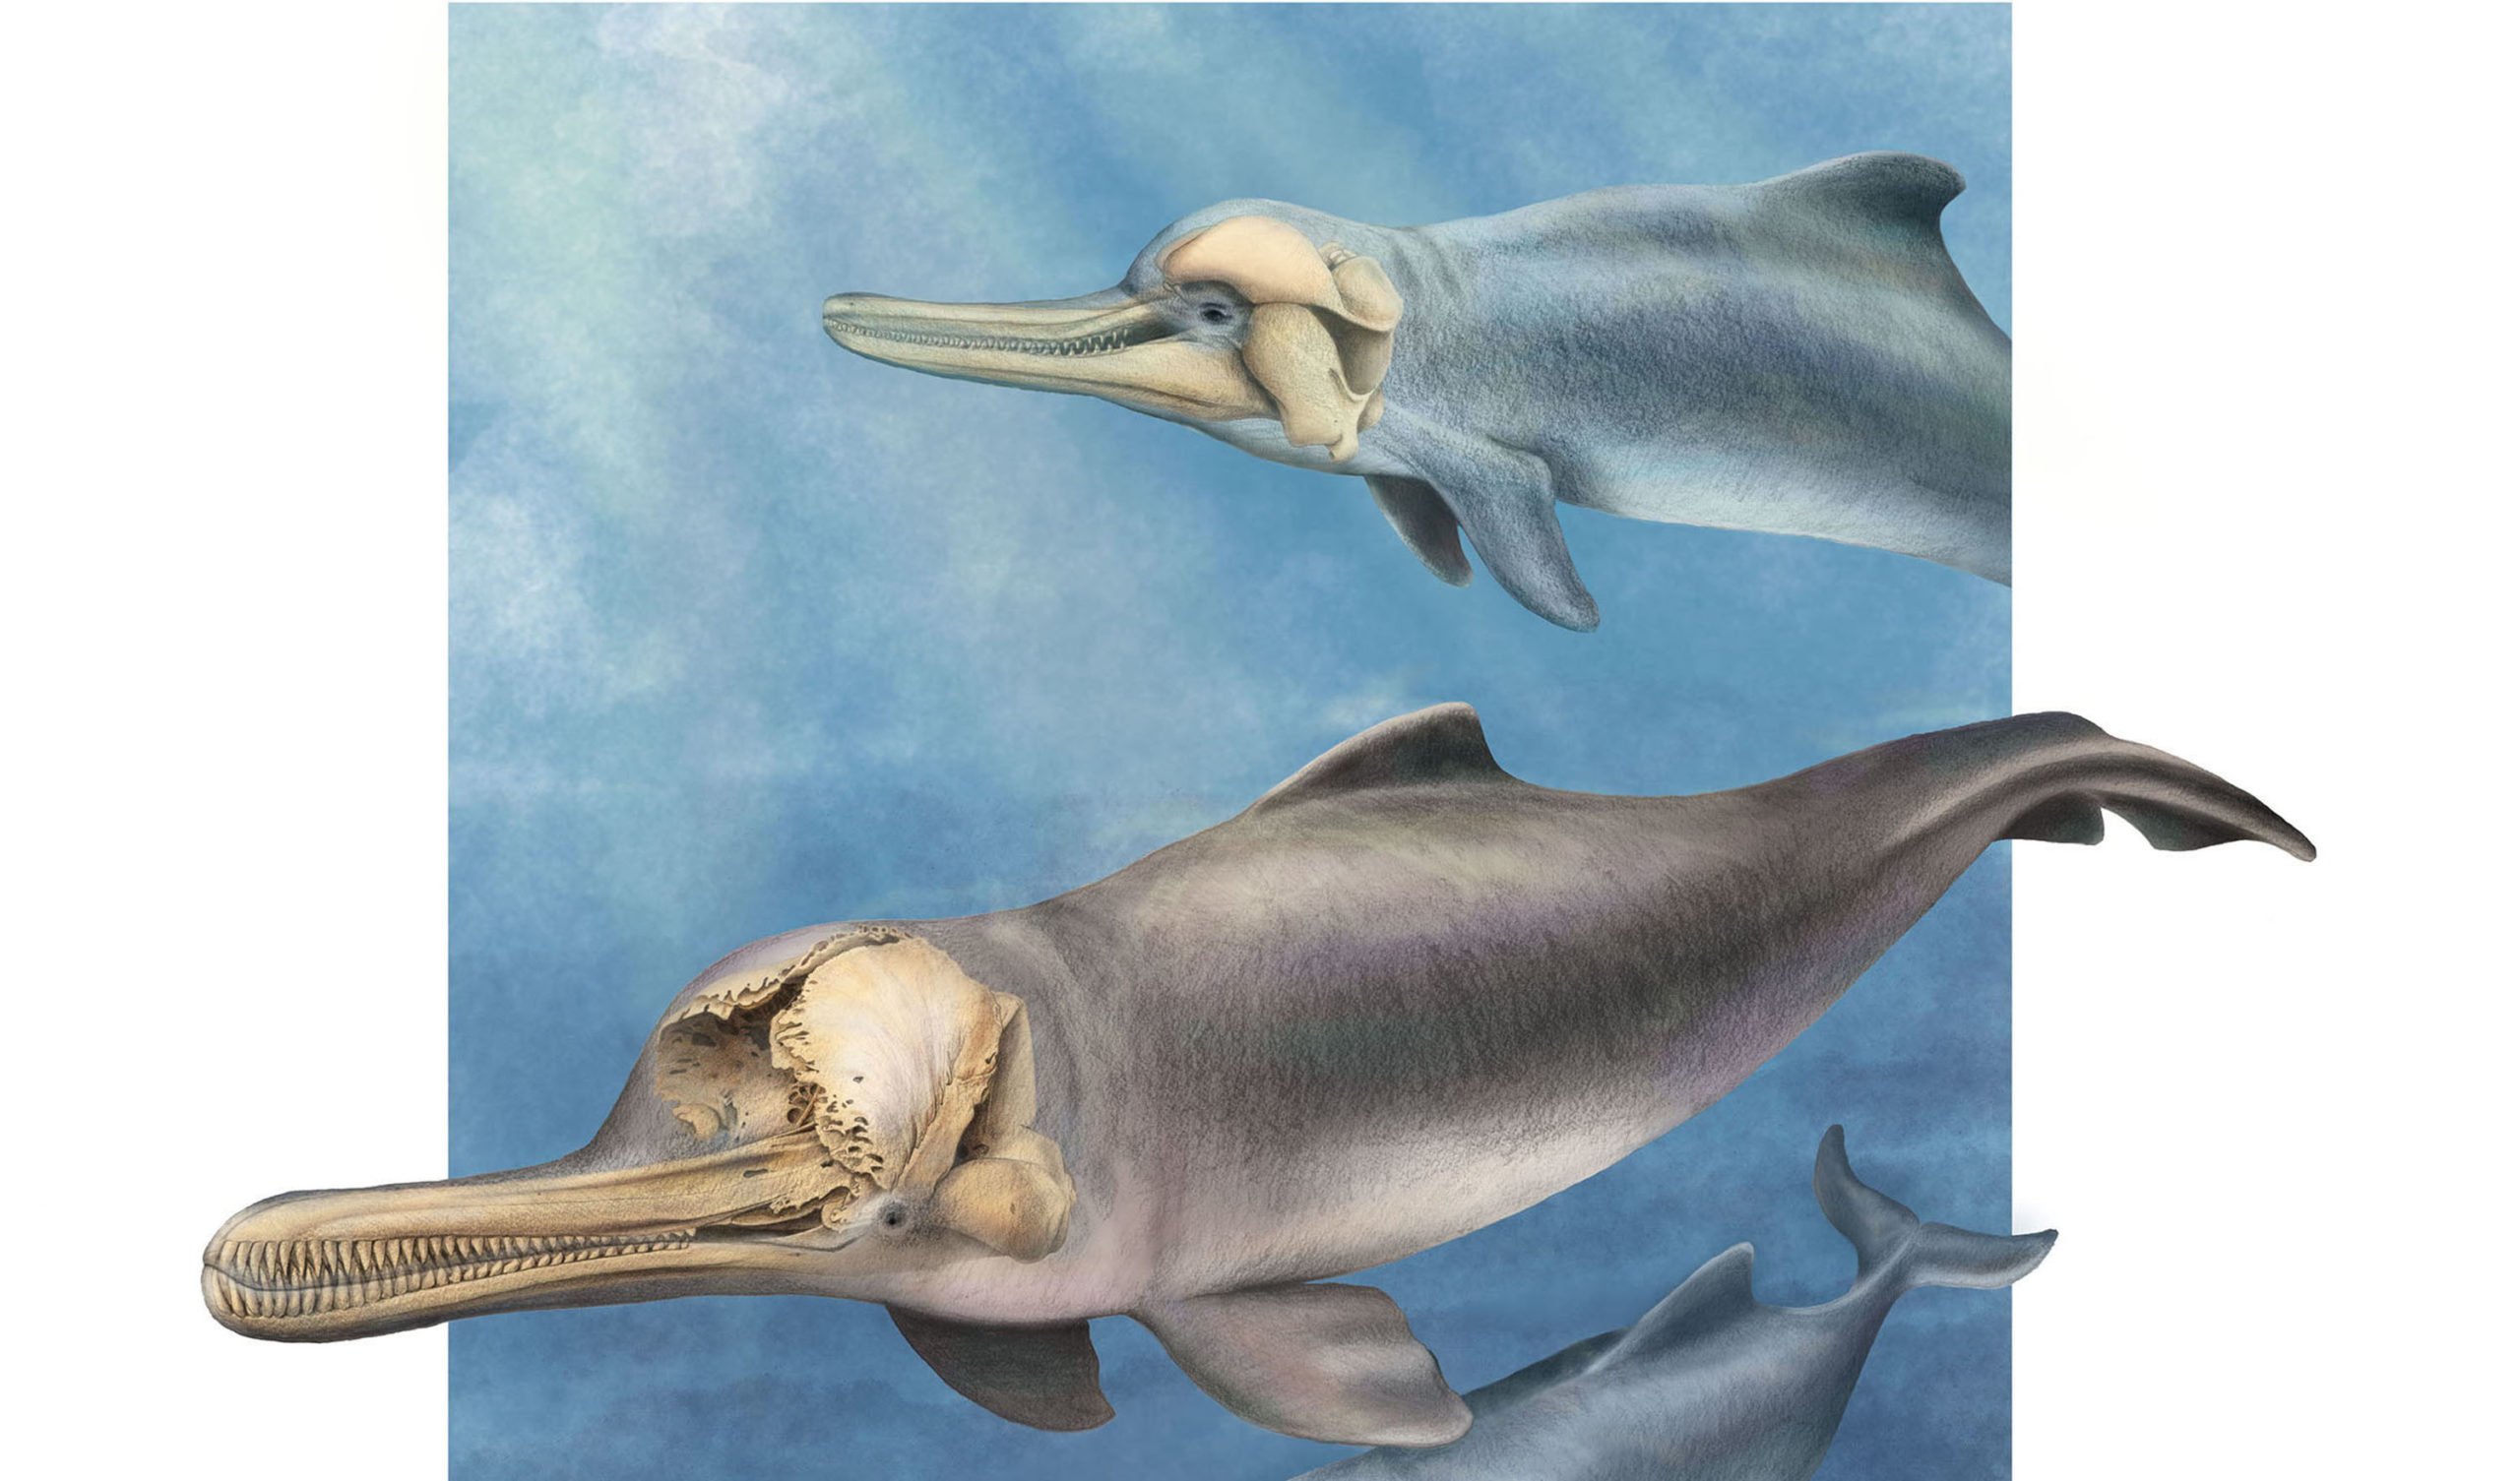 dolphin species list